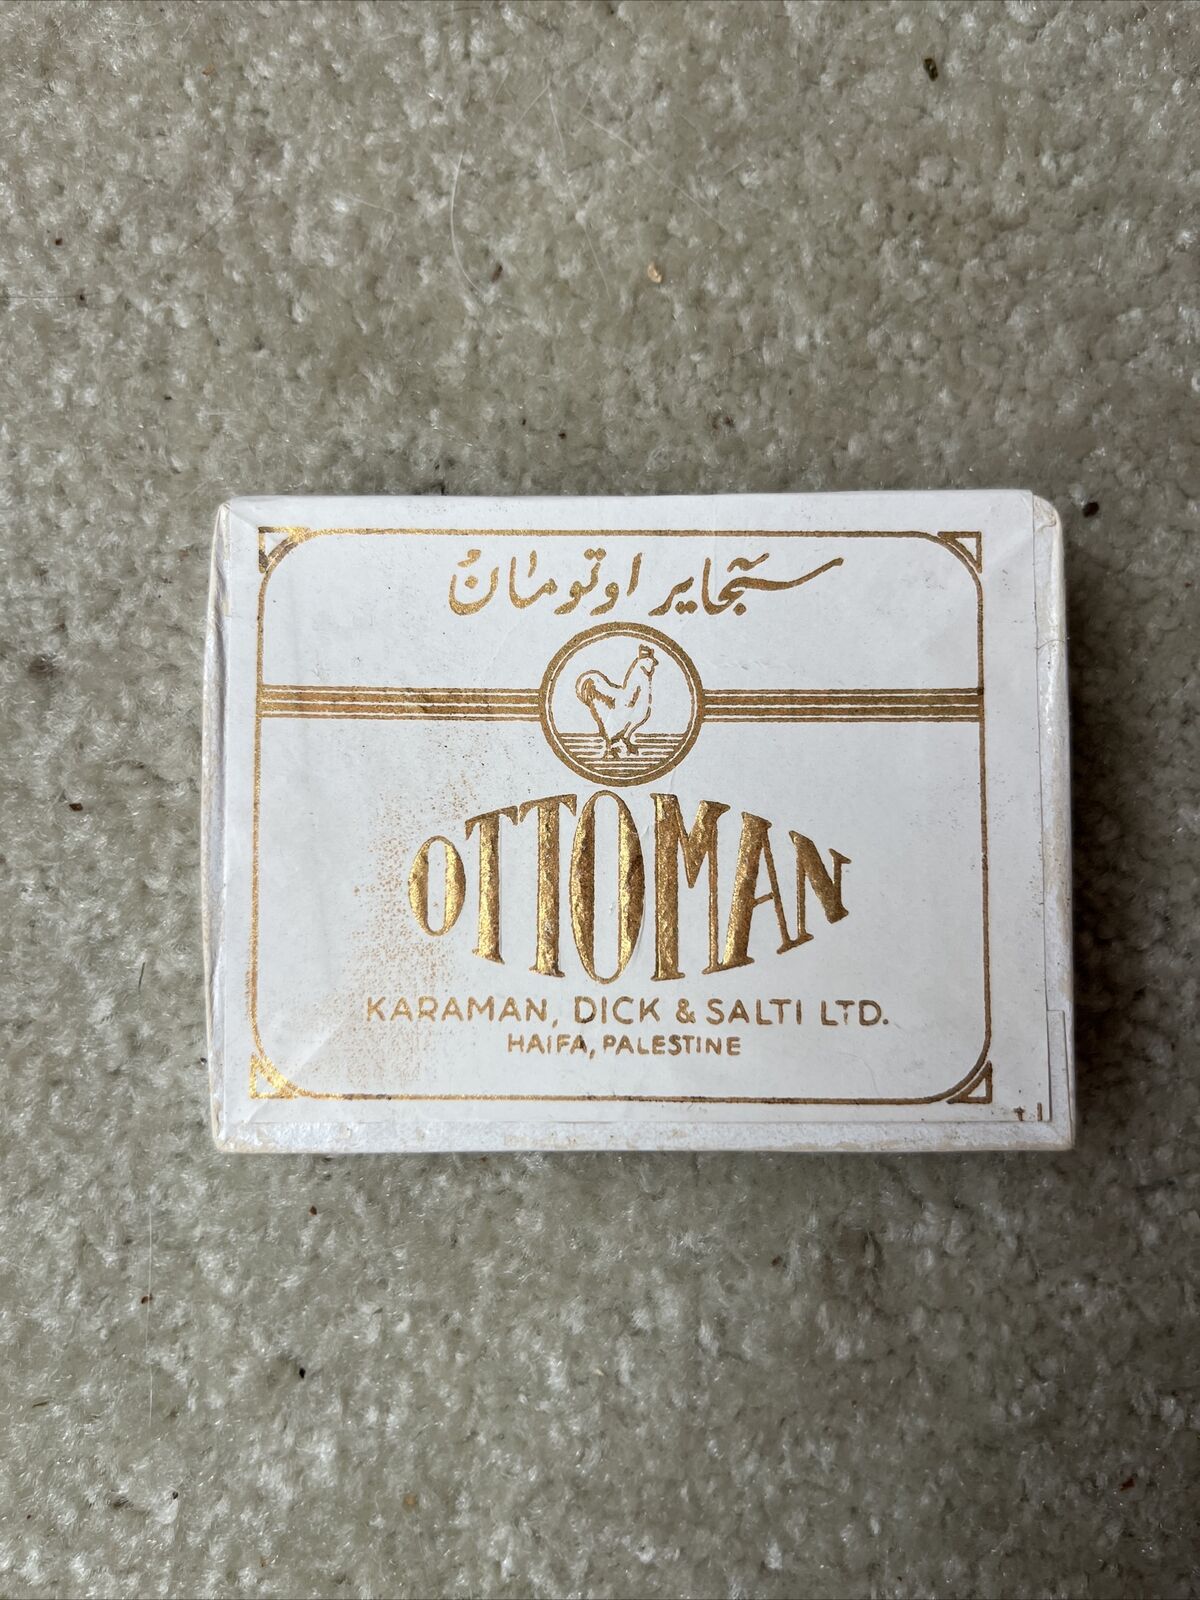 Ottoman 1940’s British Palestine Cigarettes Pack EMPTY